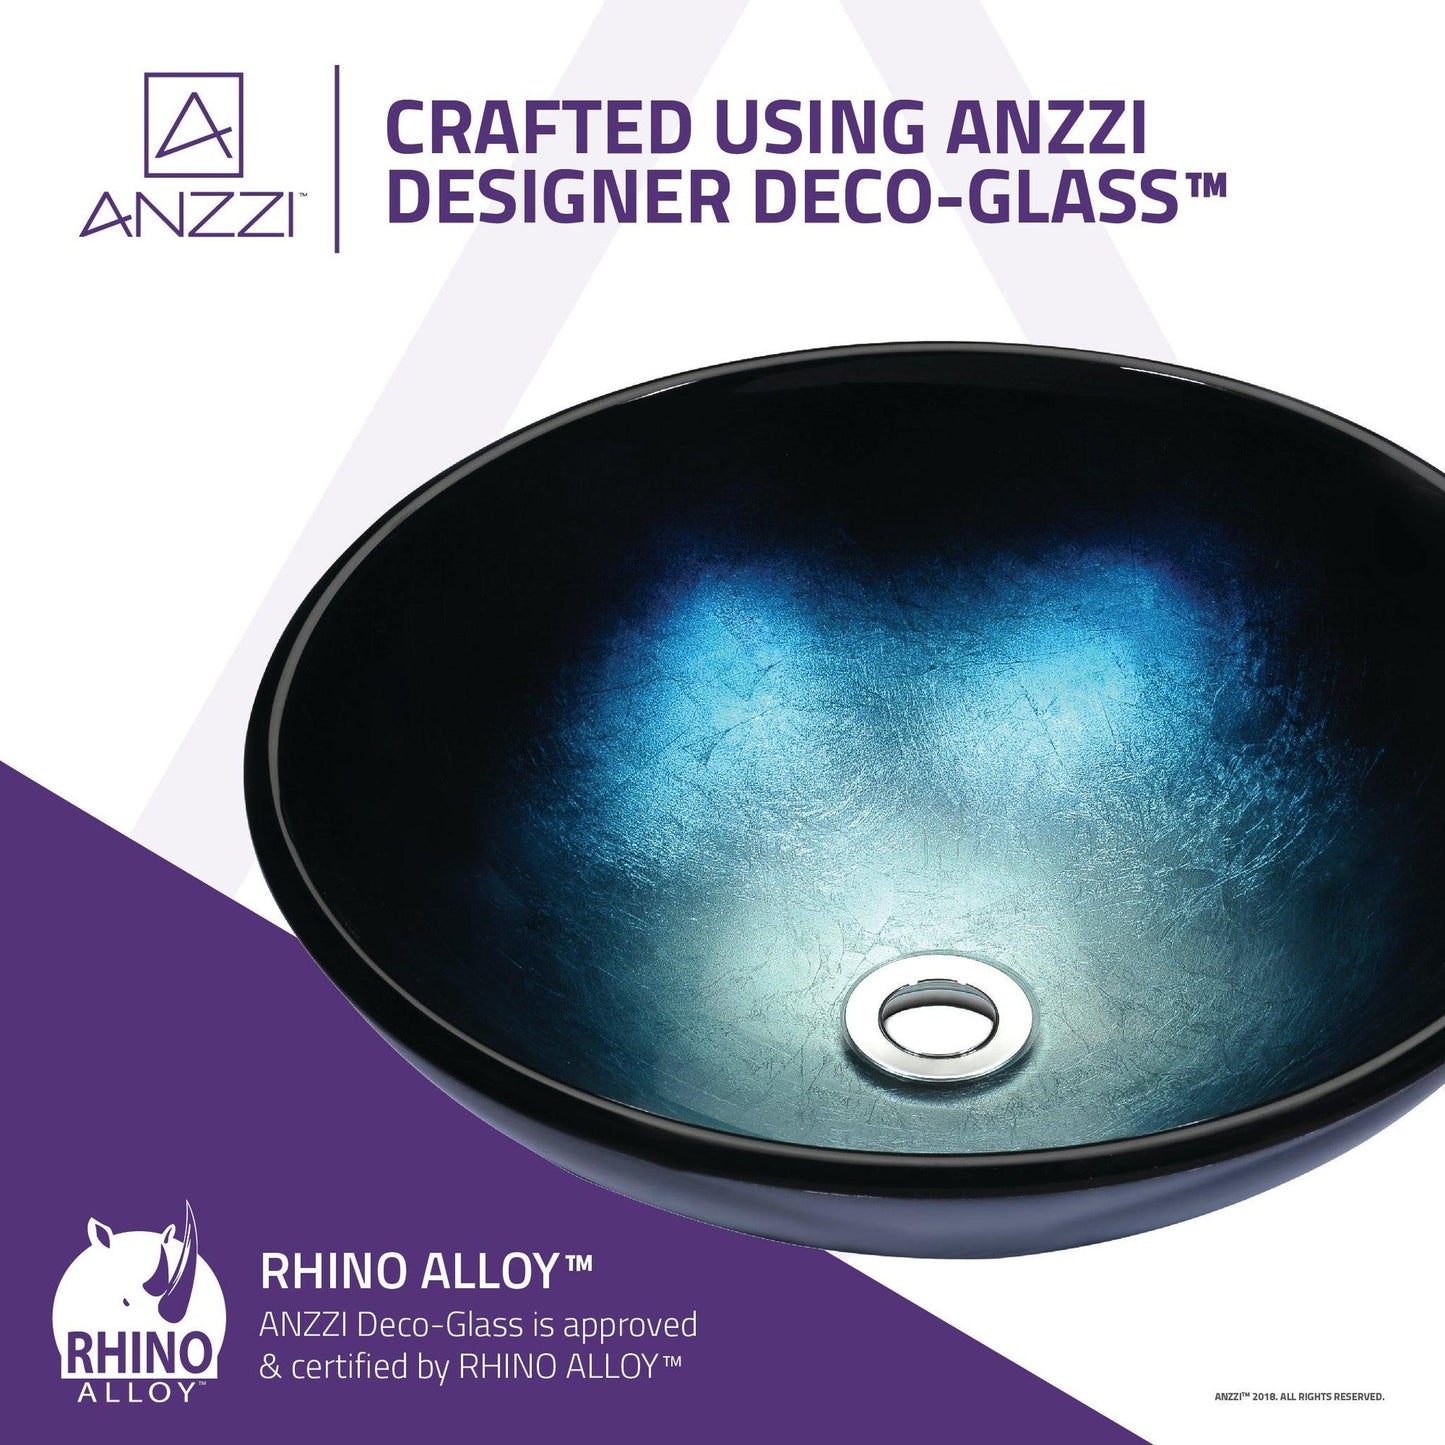 ANZZI Tara Series 17" x 17" Round Deep Sea Deco-Glass Vessel Sink With Polished Chrome Pop-Up Drain